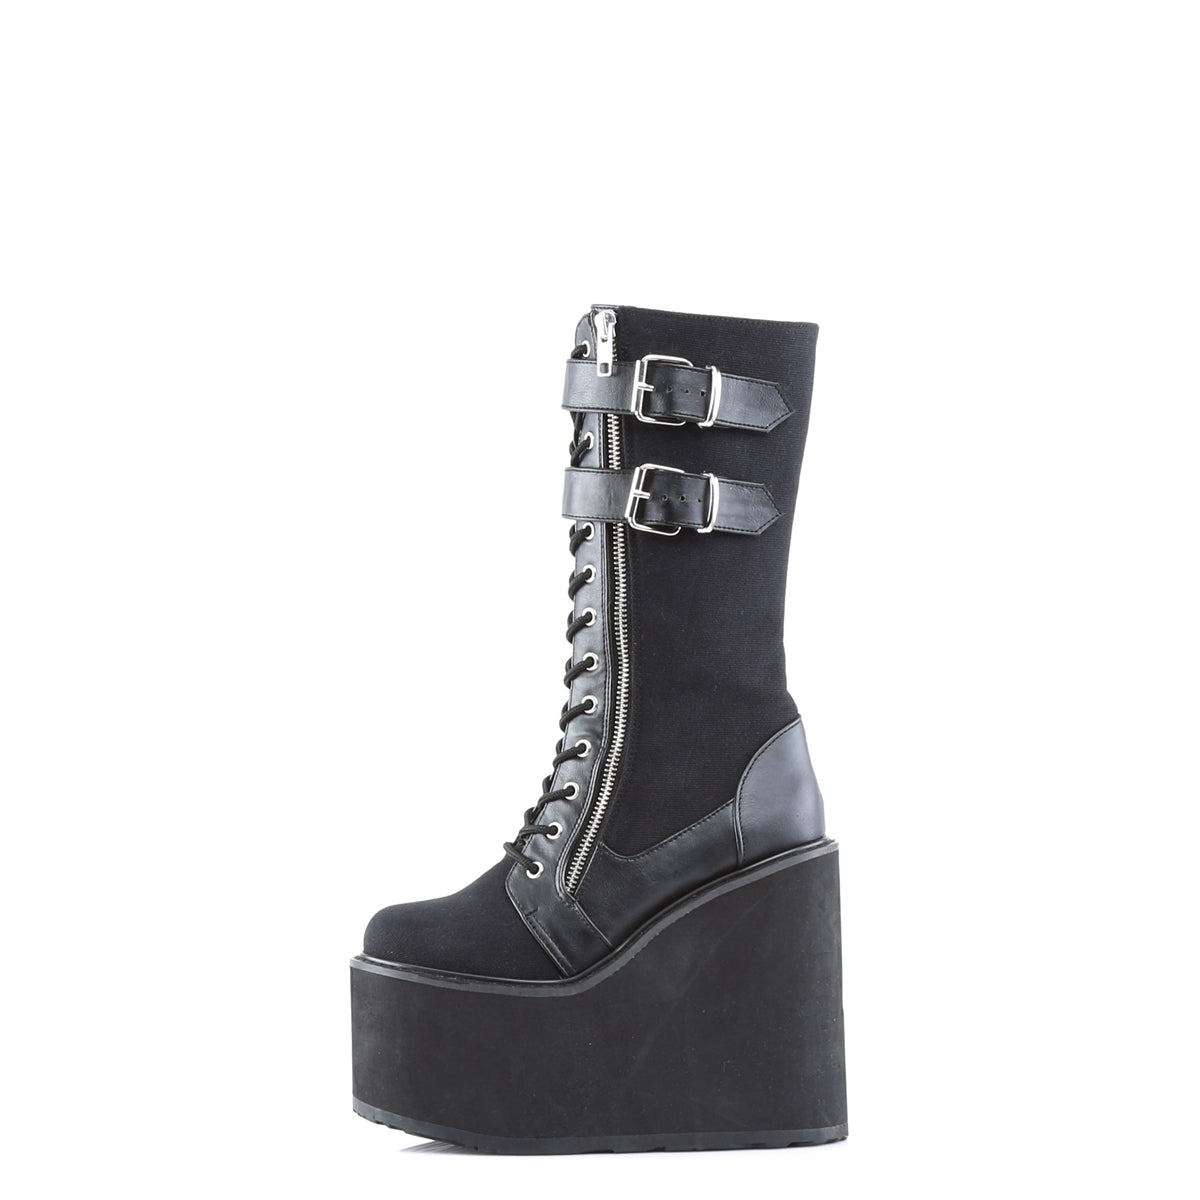 SWING-221 Demonia Black Canvas-Vegan Leather Women's Mid-Calf & Knee High Boots [Alternative Footwear]